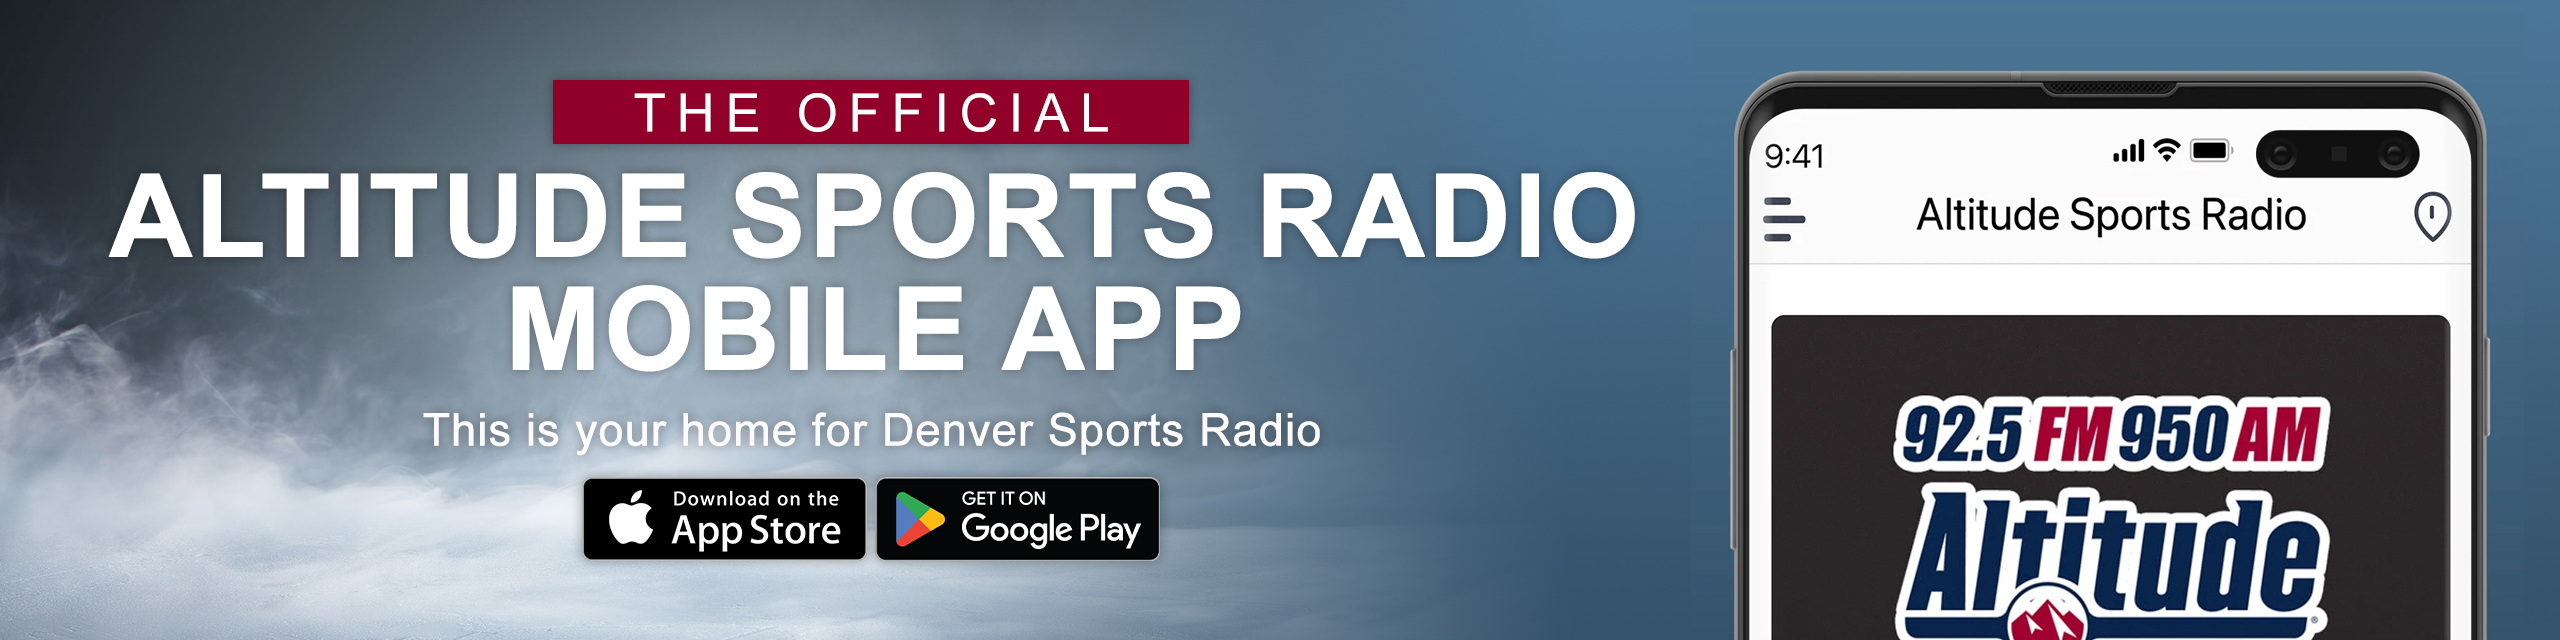 Mobile App - Altitude Sports Radio